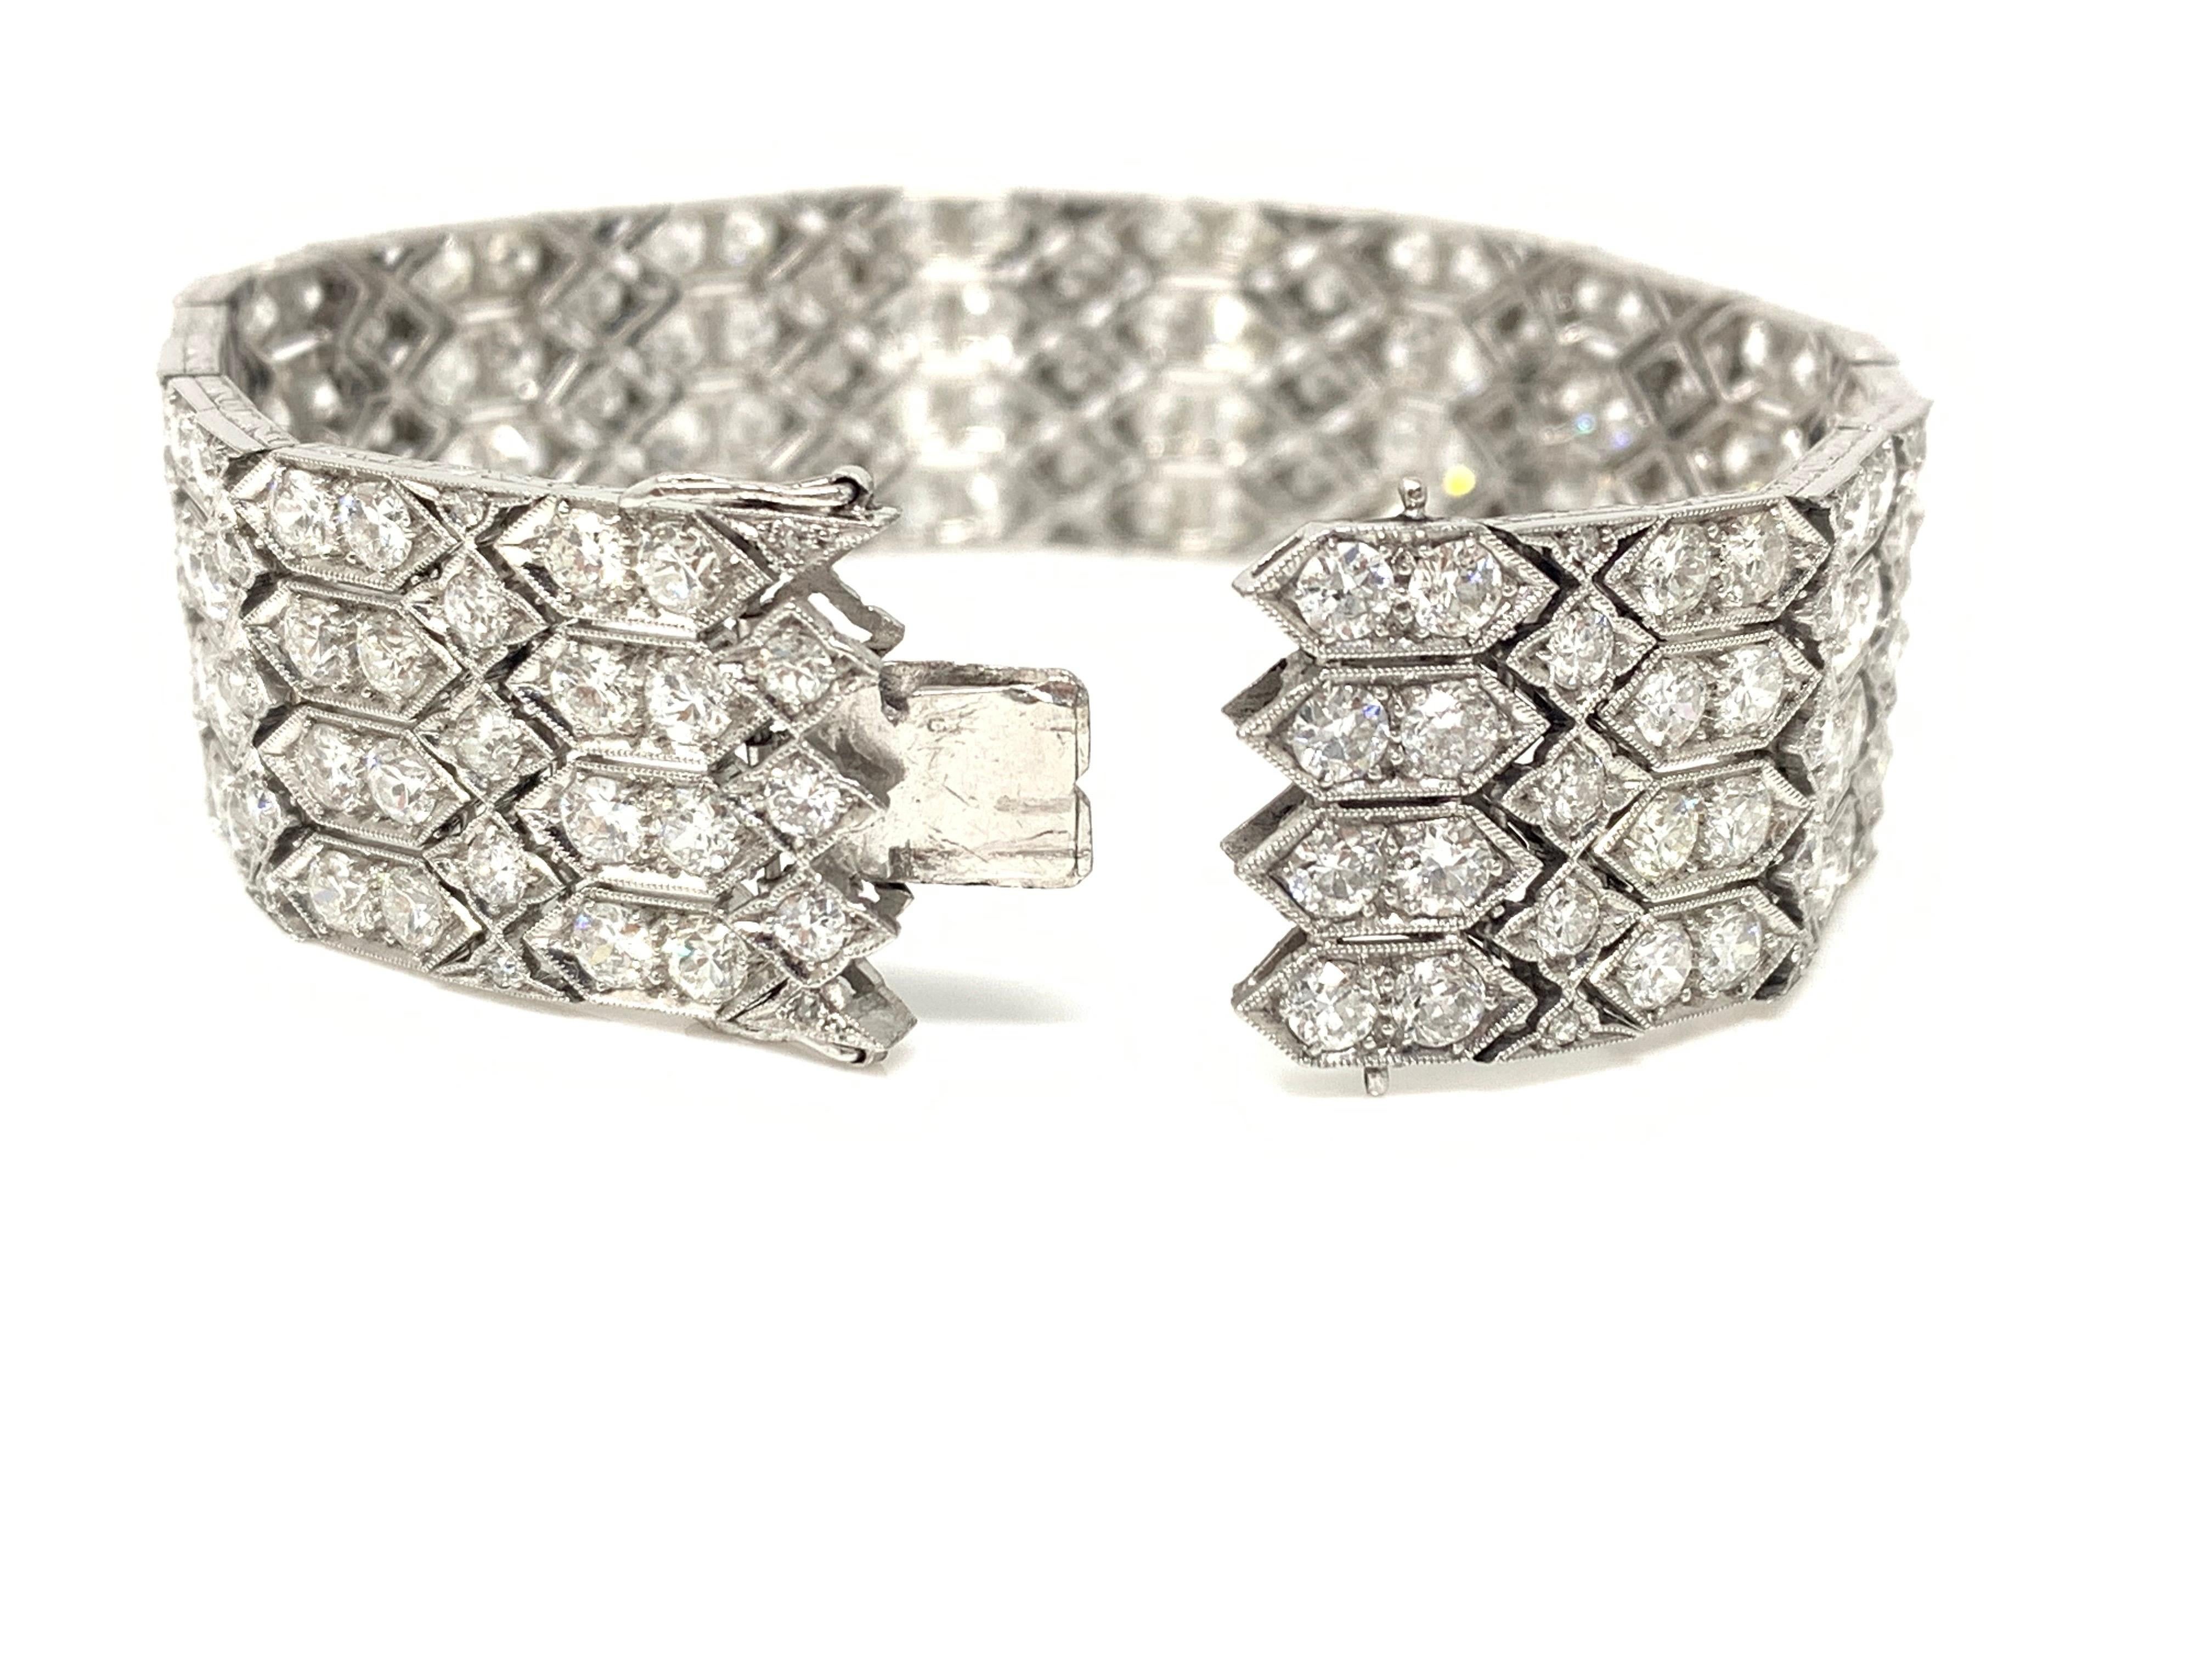 24 carat diamond bracelet